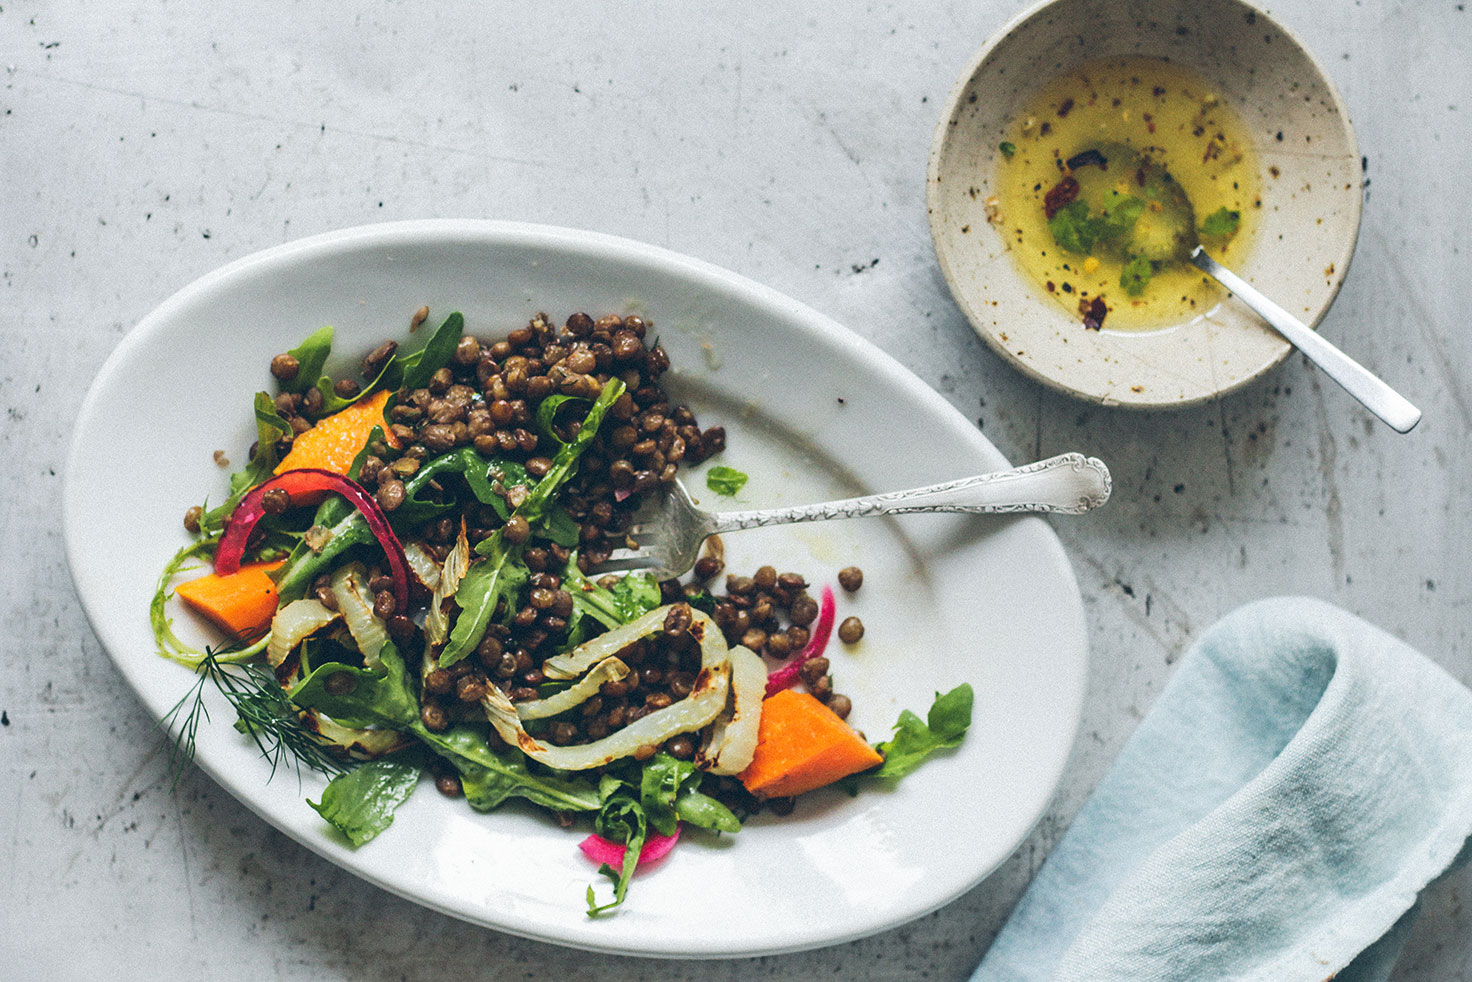 Fennel recipe: lentil salad with amaranth oil and mint dressing